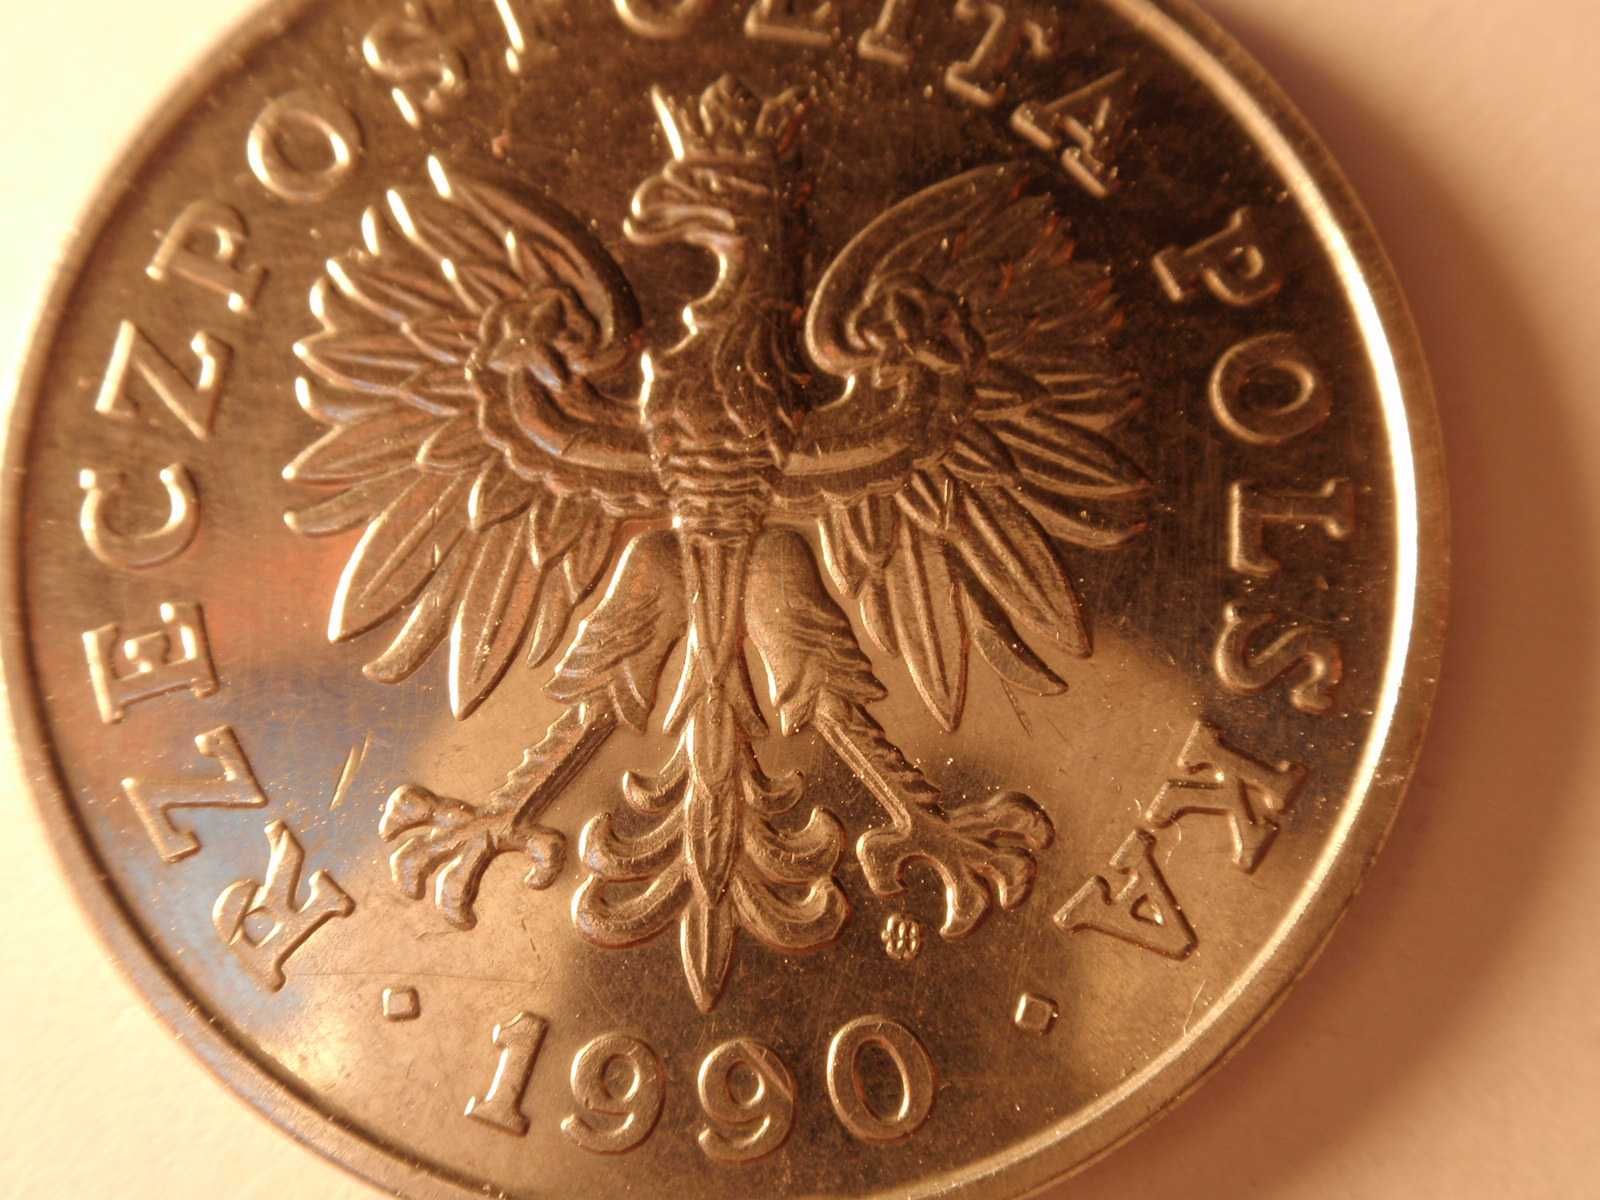 Moneta 100 zł z 1990 roku